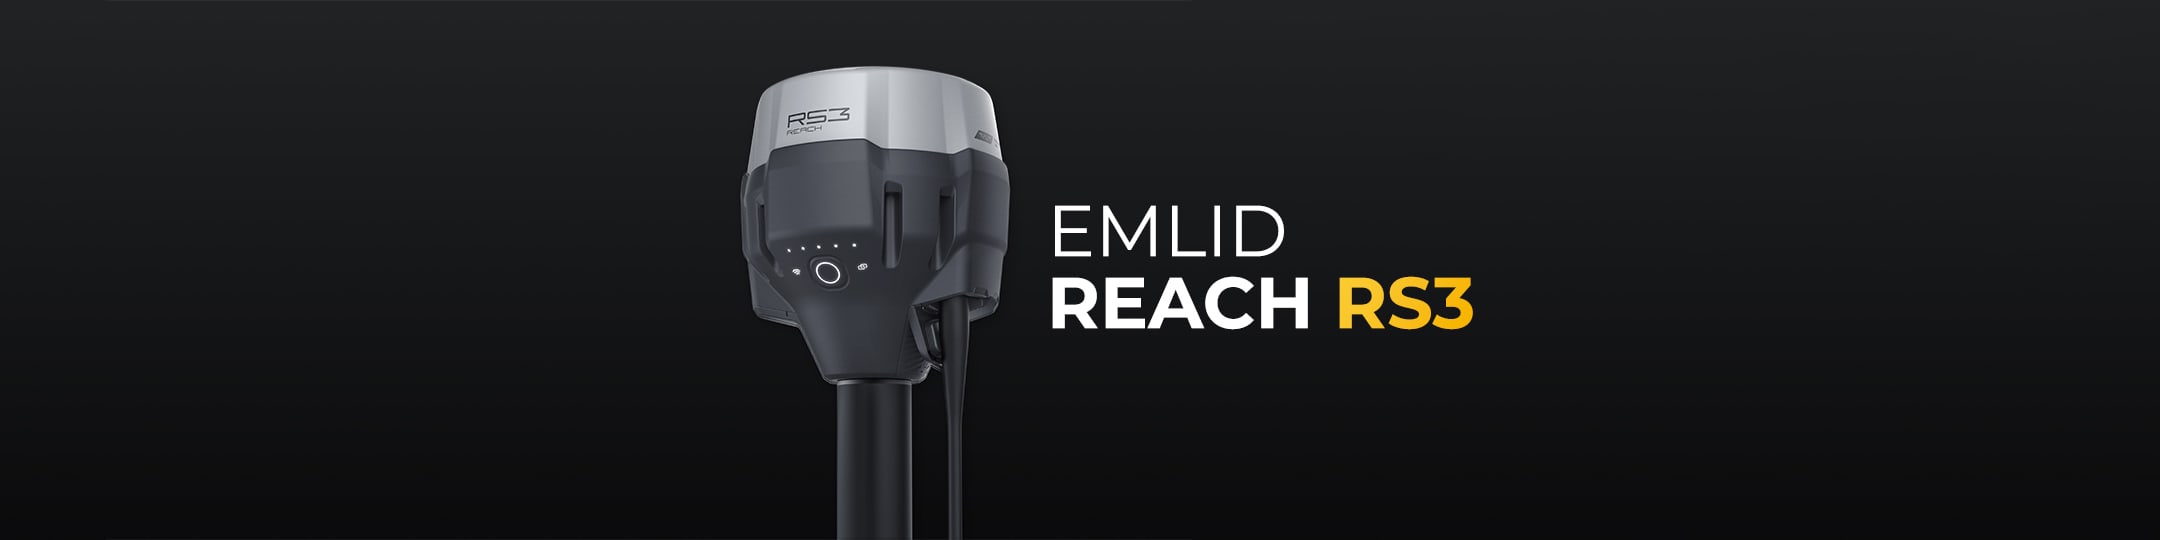 Emlid Reach RS3